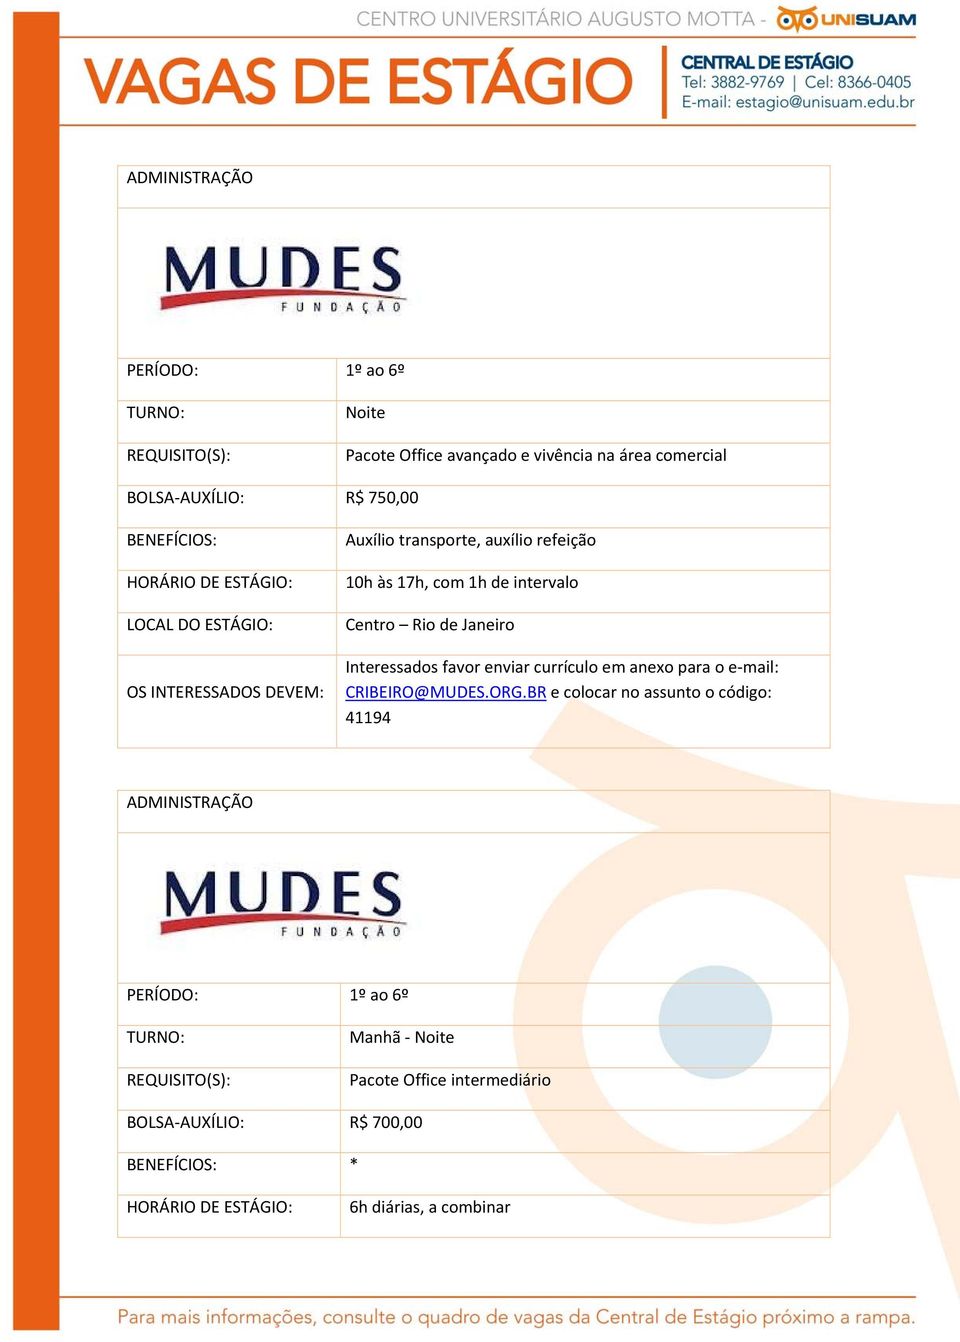 anexo para o e mail: CRIBEIRO@MUDES.ORG.